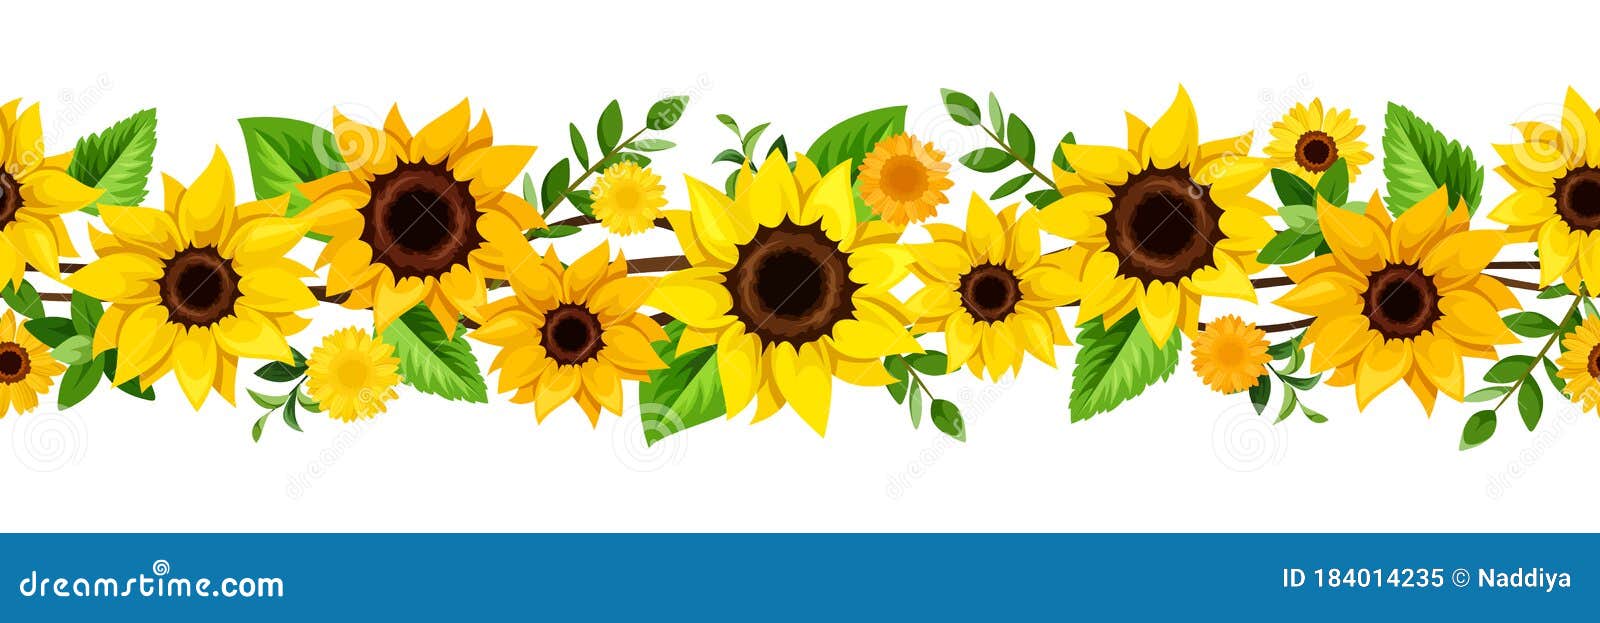 horizontal seamless border with yellow sunflowers.  .